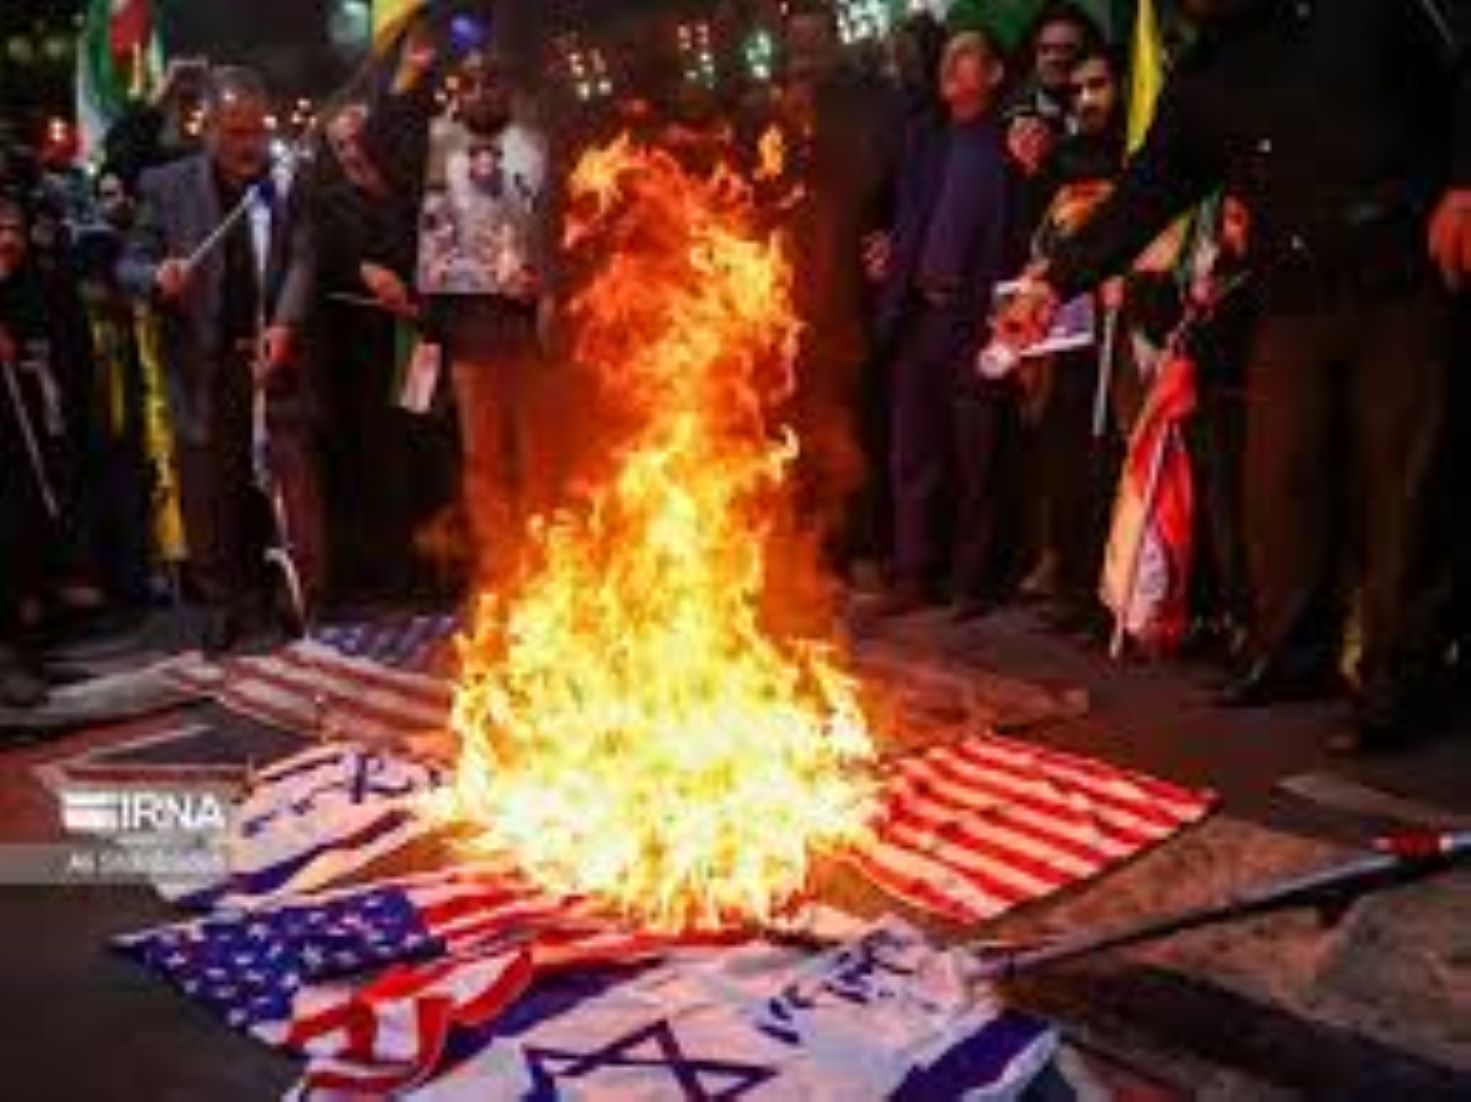 Iran Warns U.S. Not To Fall Into Israel’s “Trap”